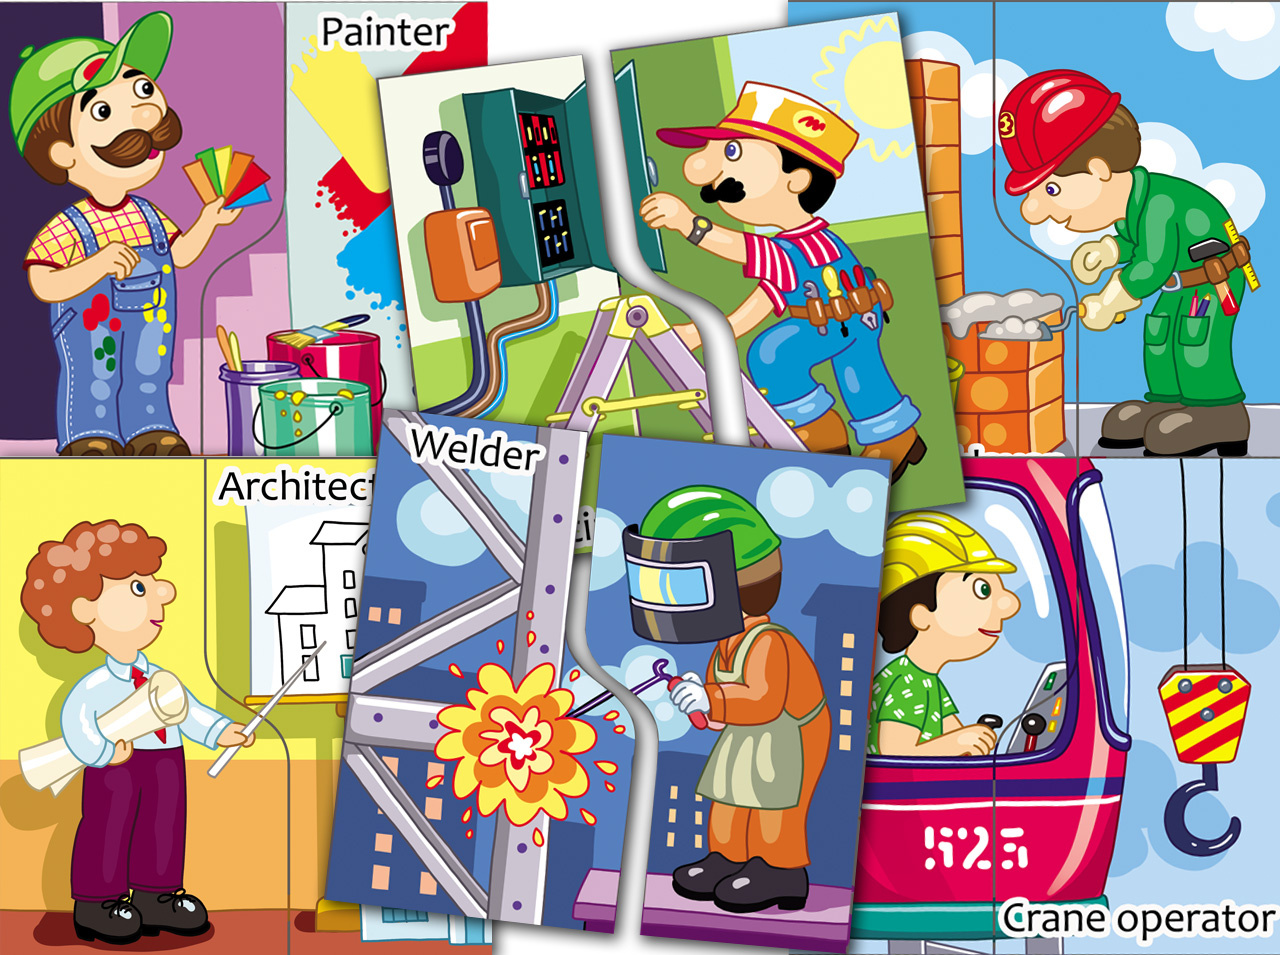 Community Helpers Illustrated Cards for Preschool Activities. Construction worker